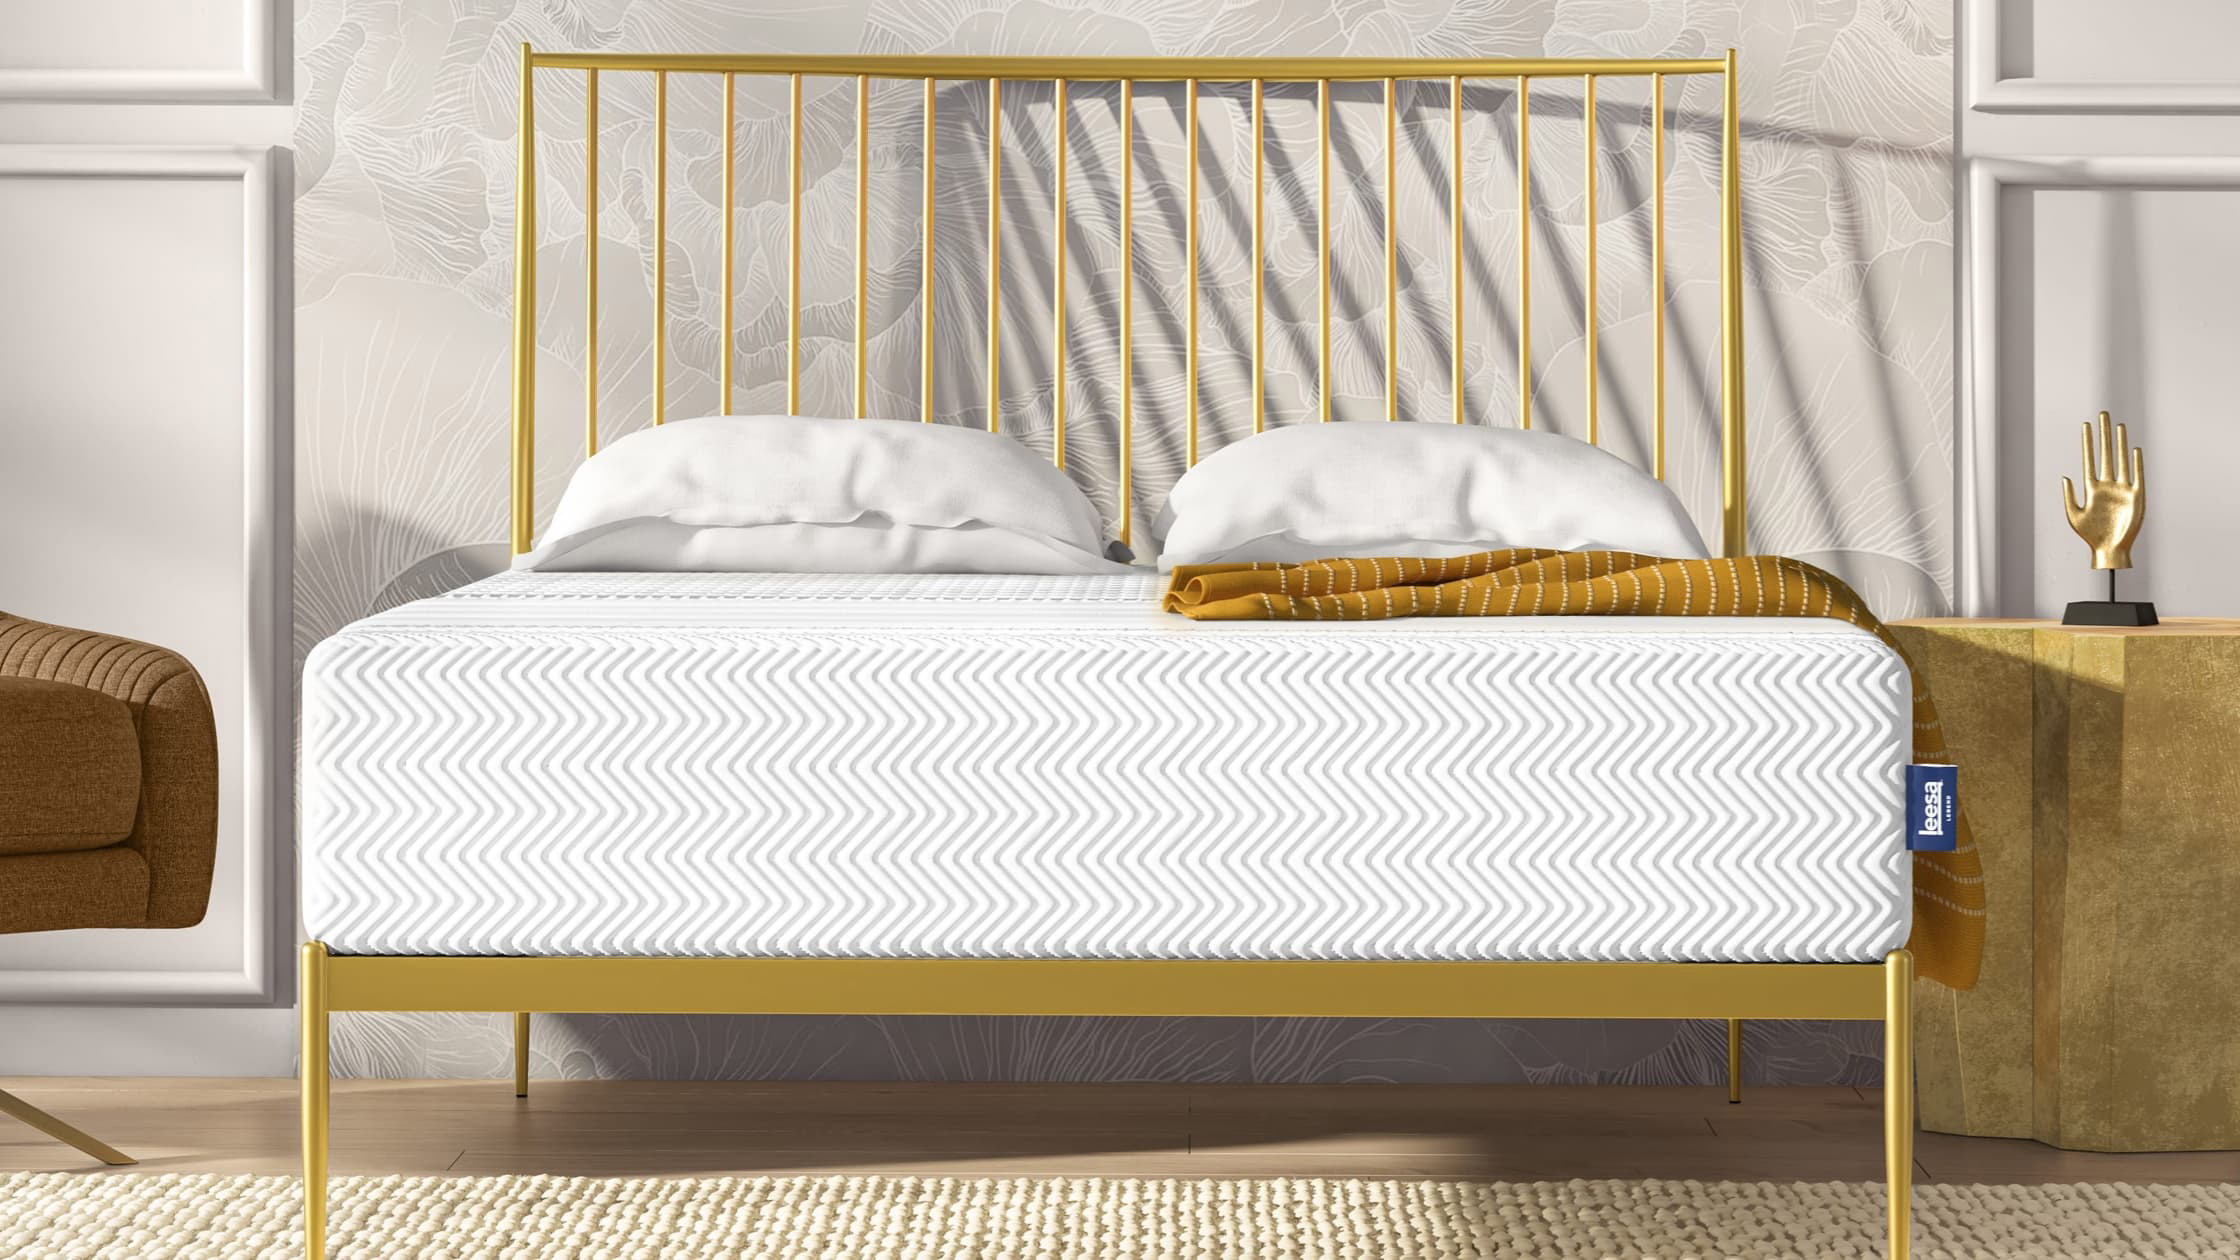 Leesa Legend Hybrid mattress on a light wood bedframe placed in a white bedroom